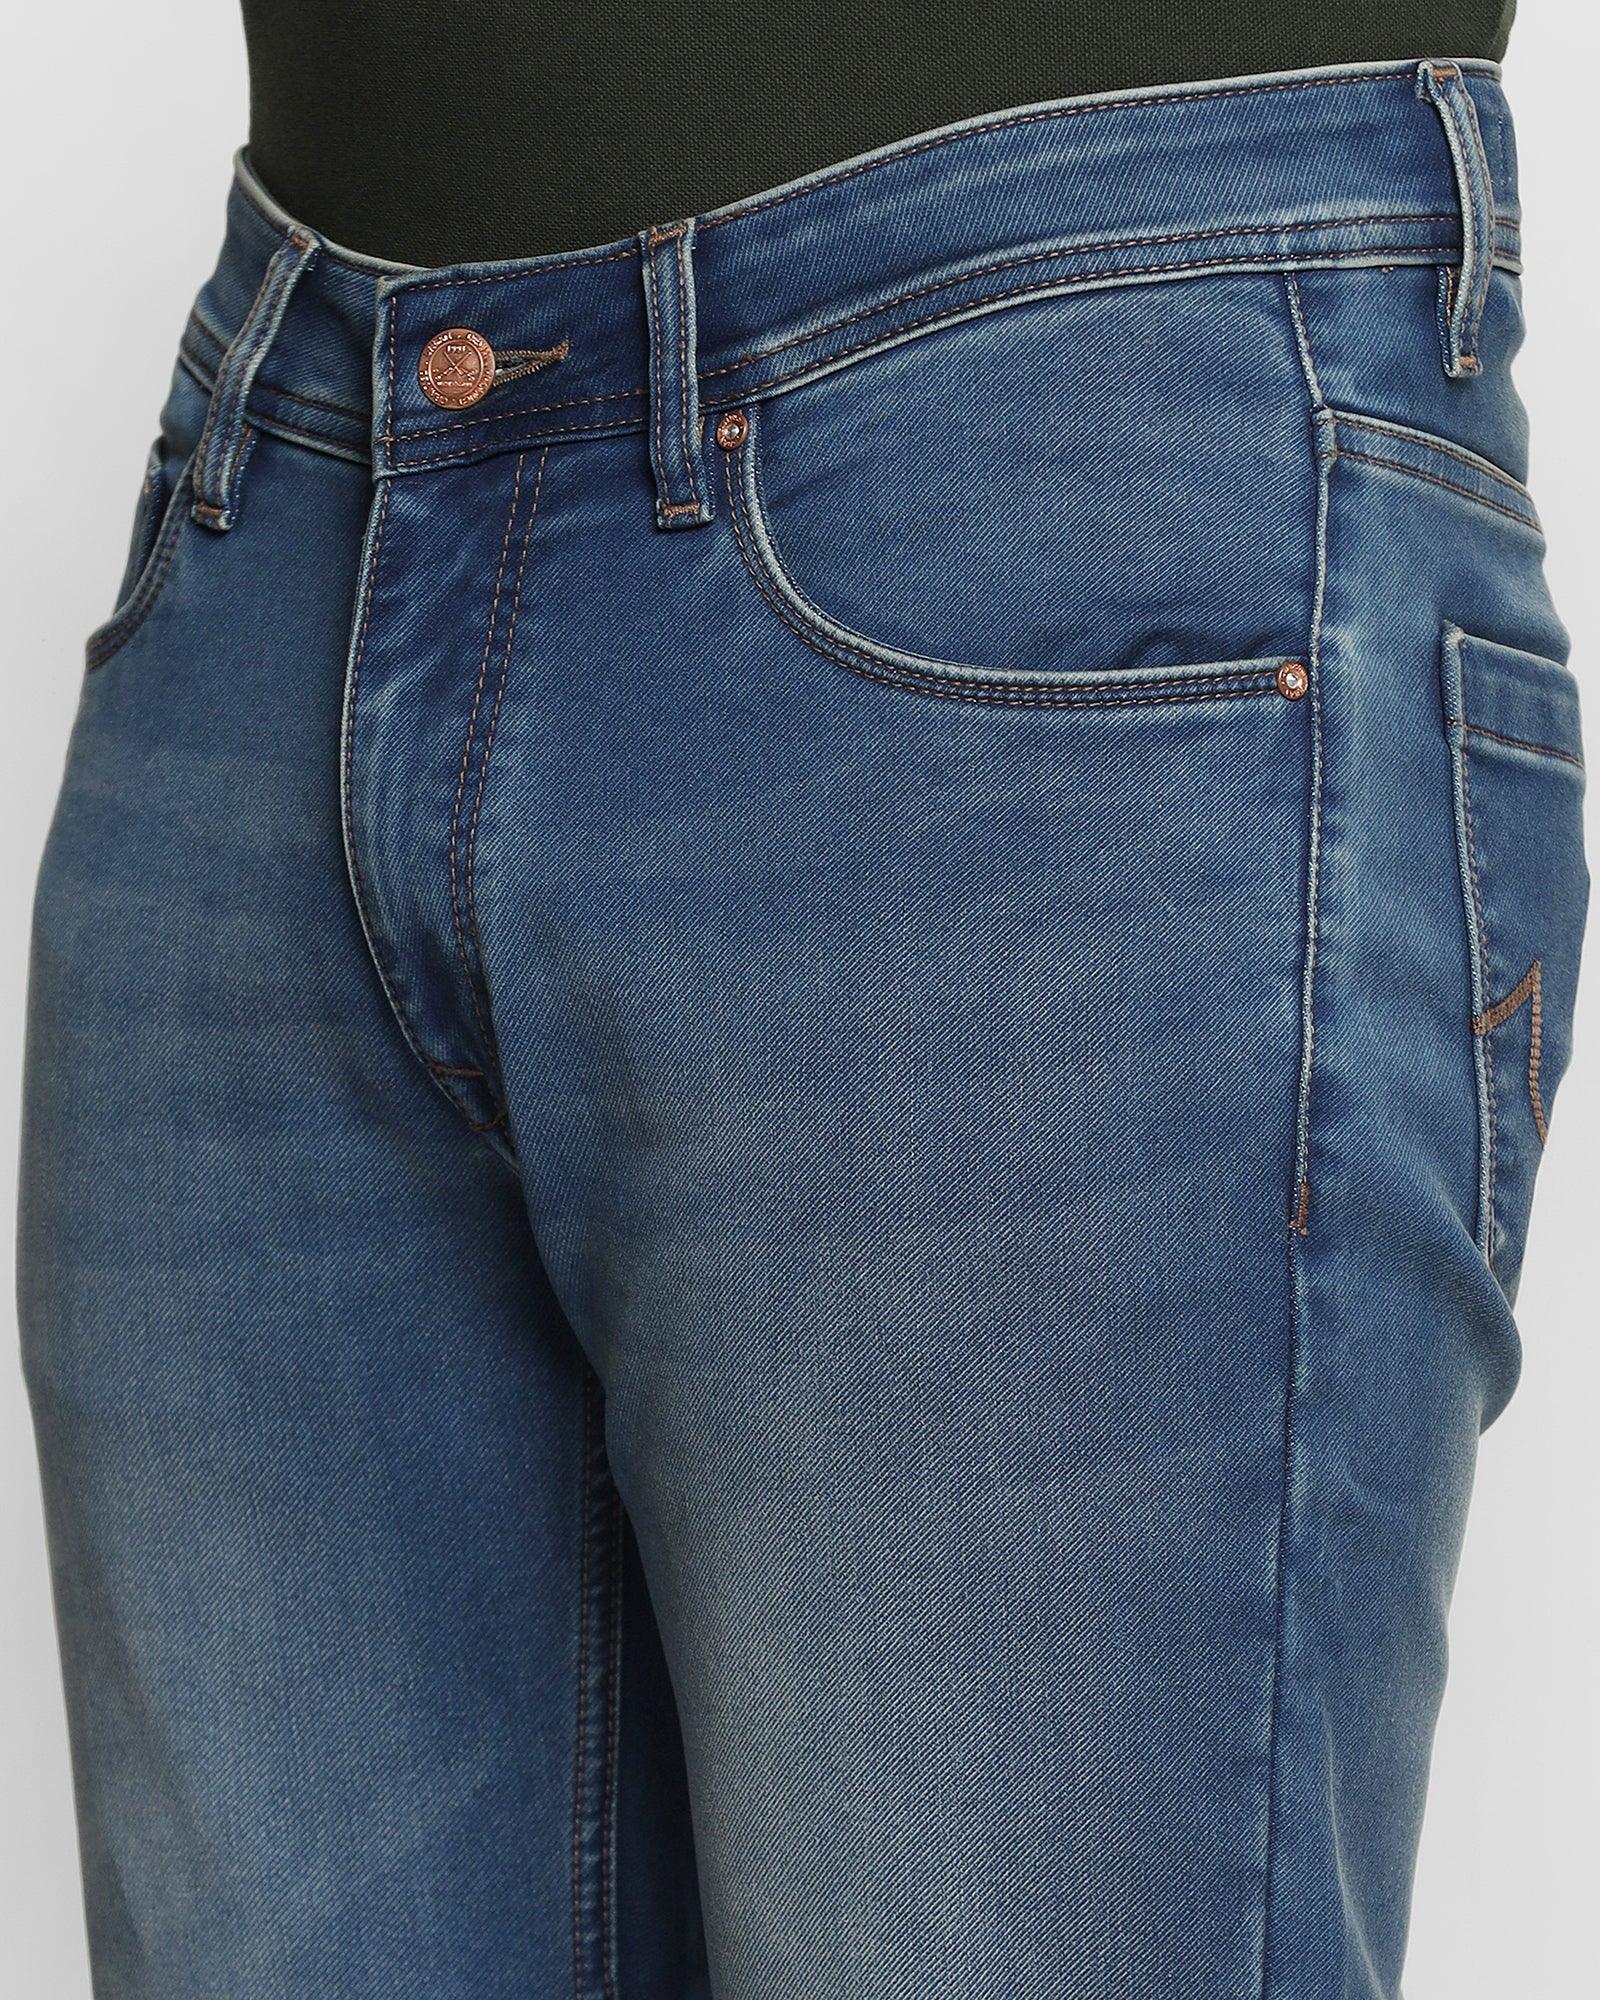 Ultra Stretch Slim Comfort Buff Fit Indigo Jeans - Andy